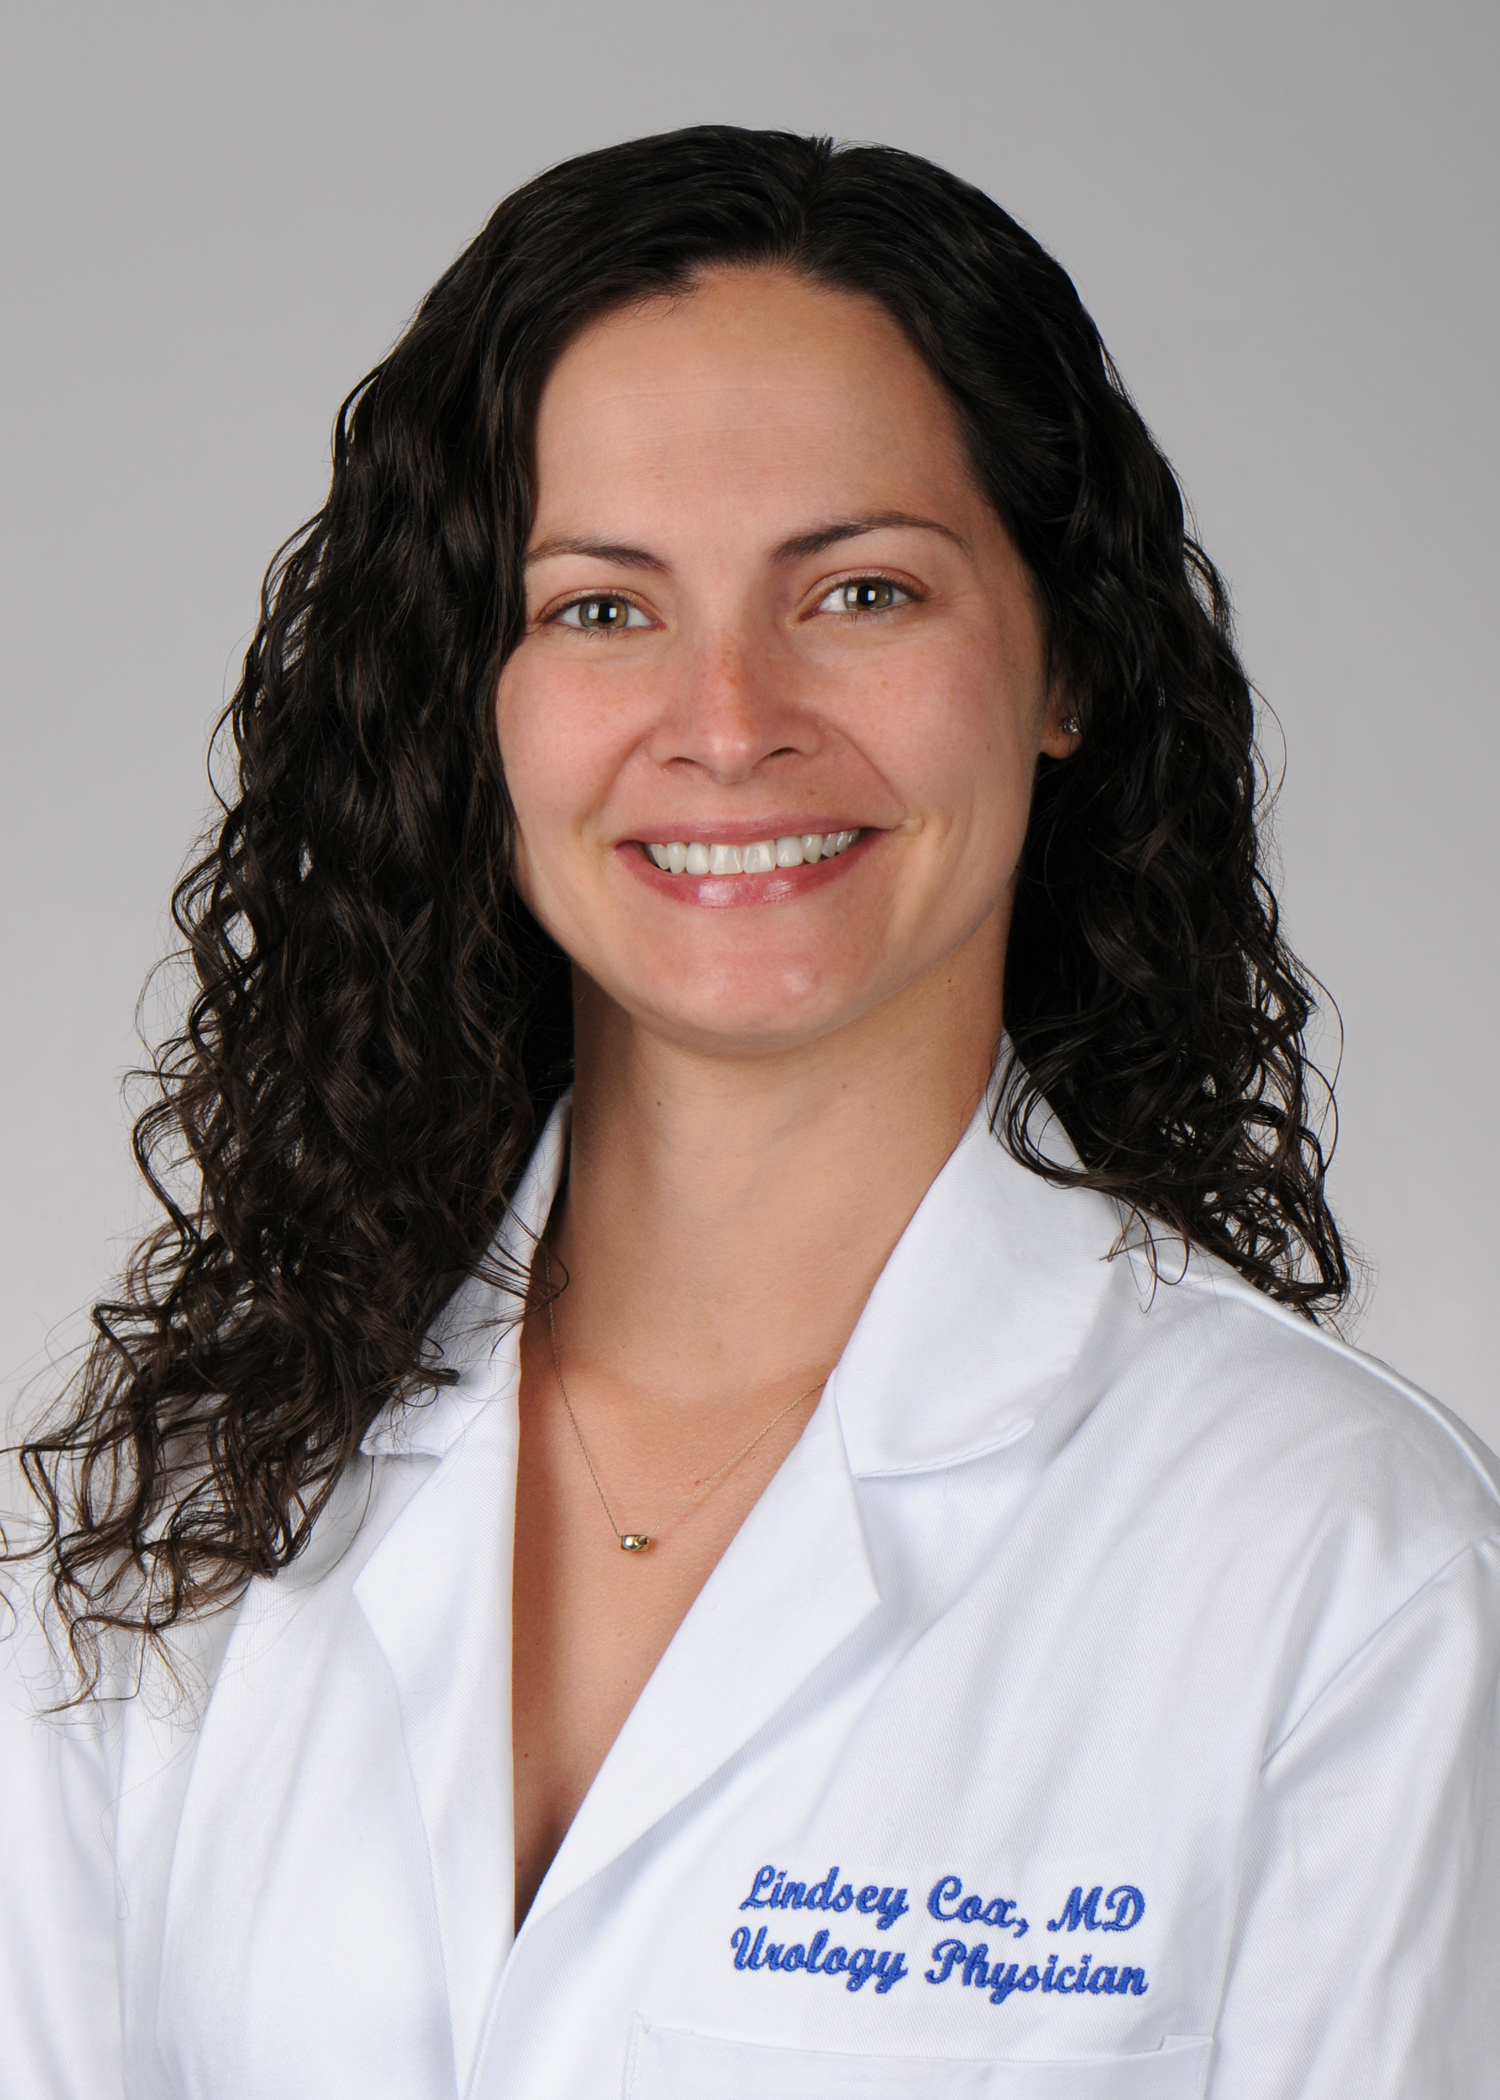 Dr. Lindsey Cox